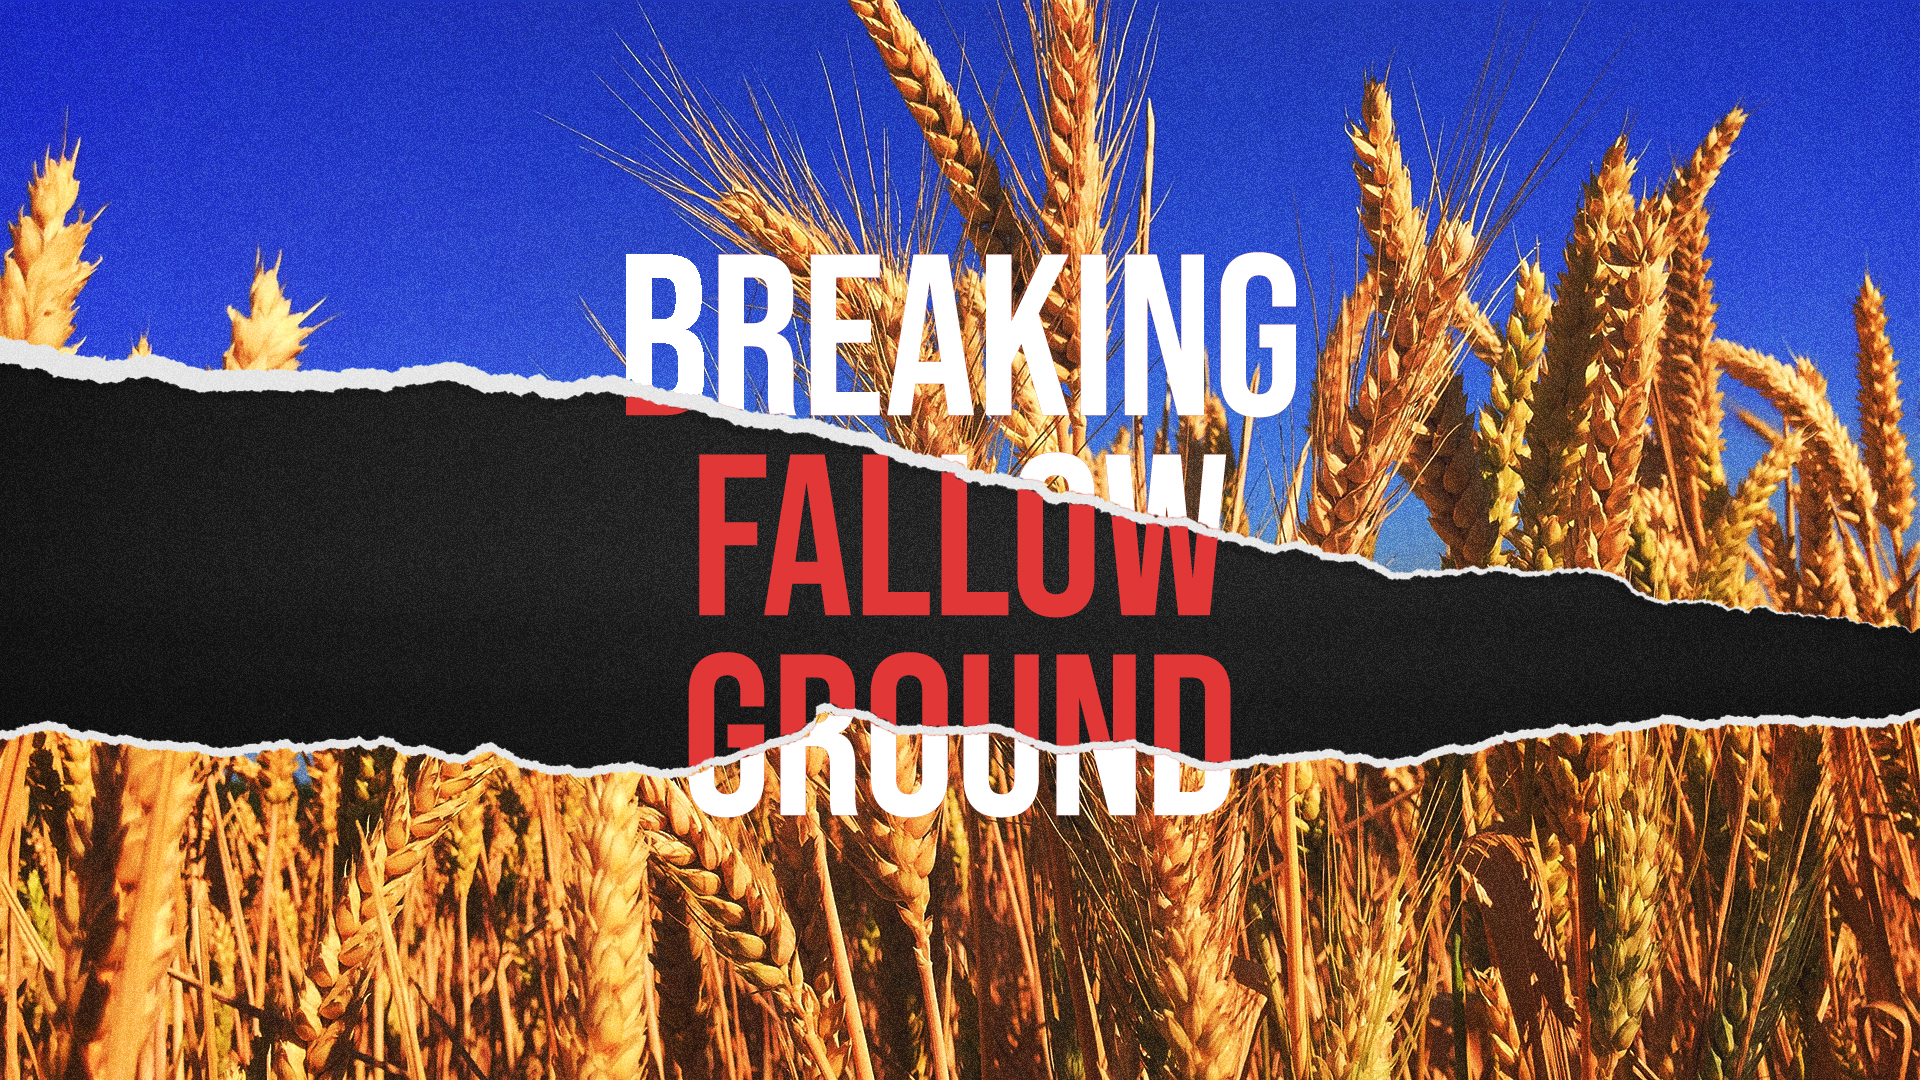 Breaking Fallow Ground banner